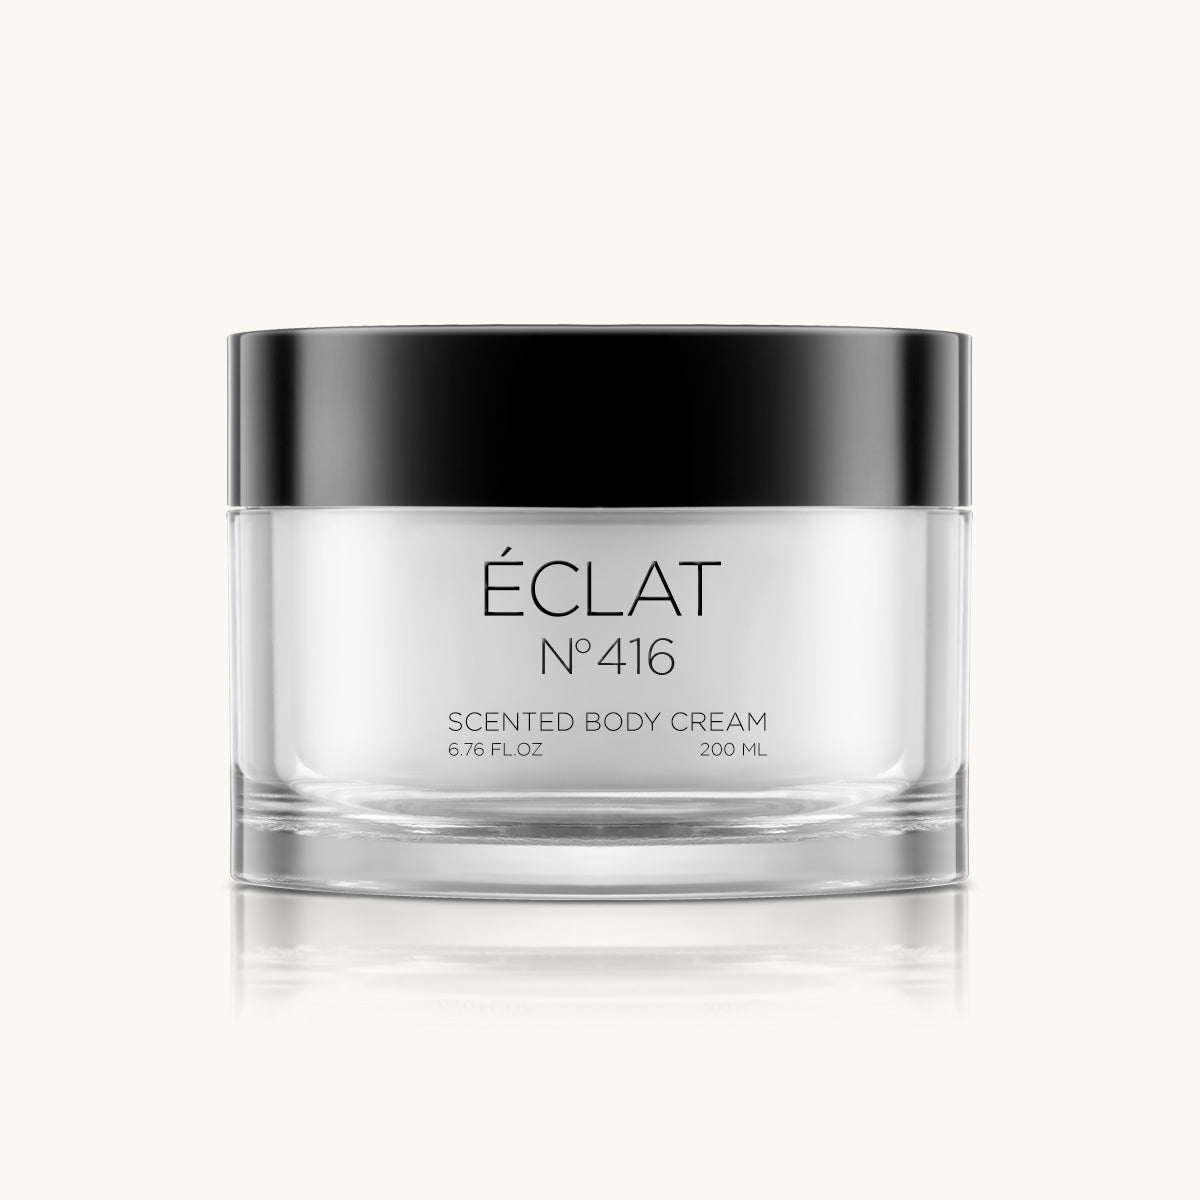 ÉCLAT 416 Body Cream